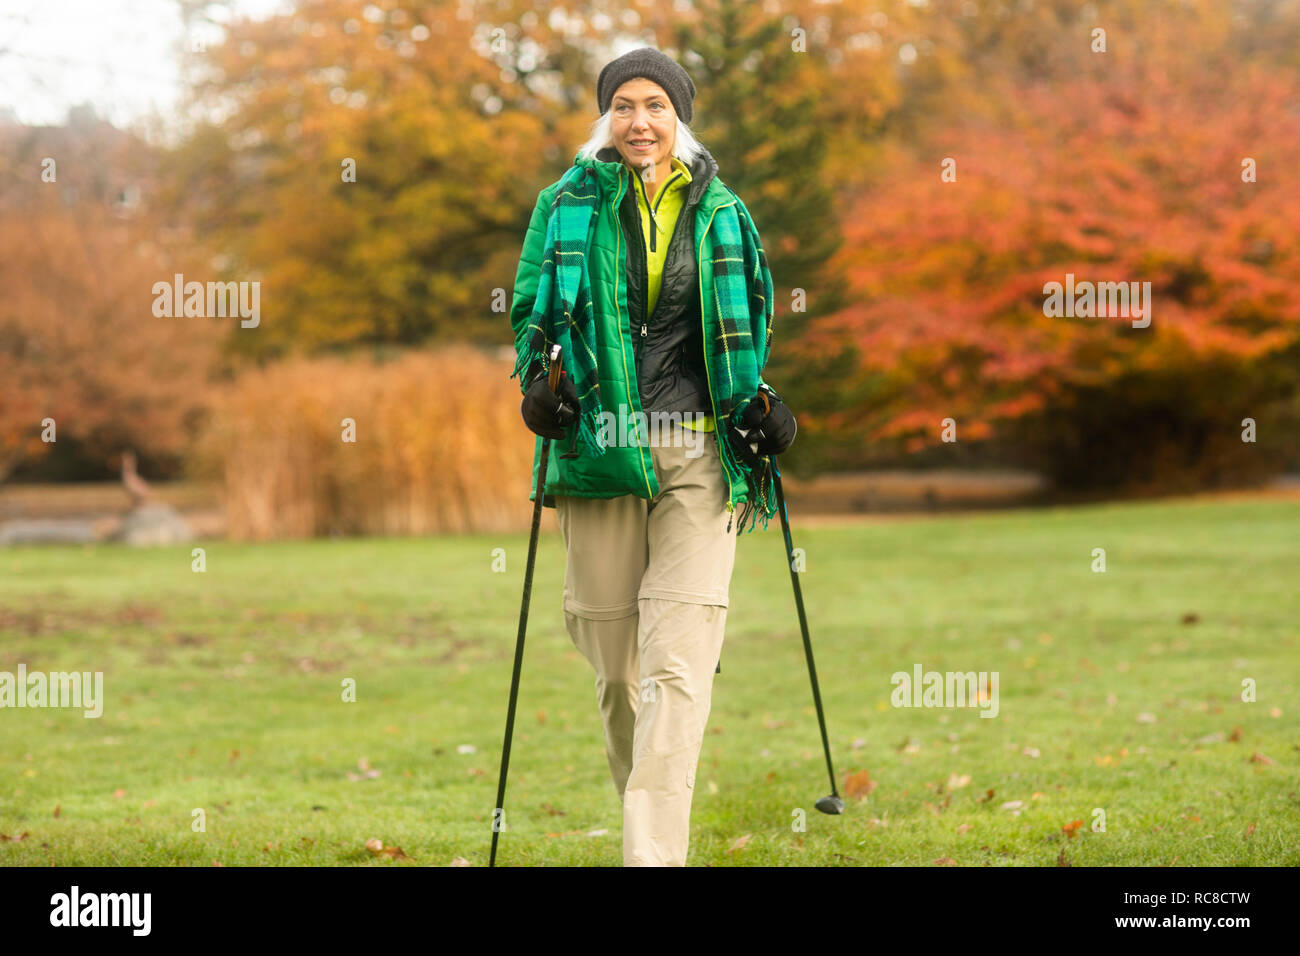 Mature woman nordic walking in park Stock Photo